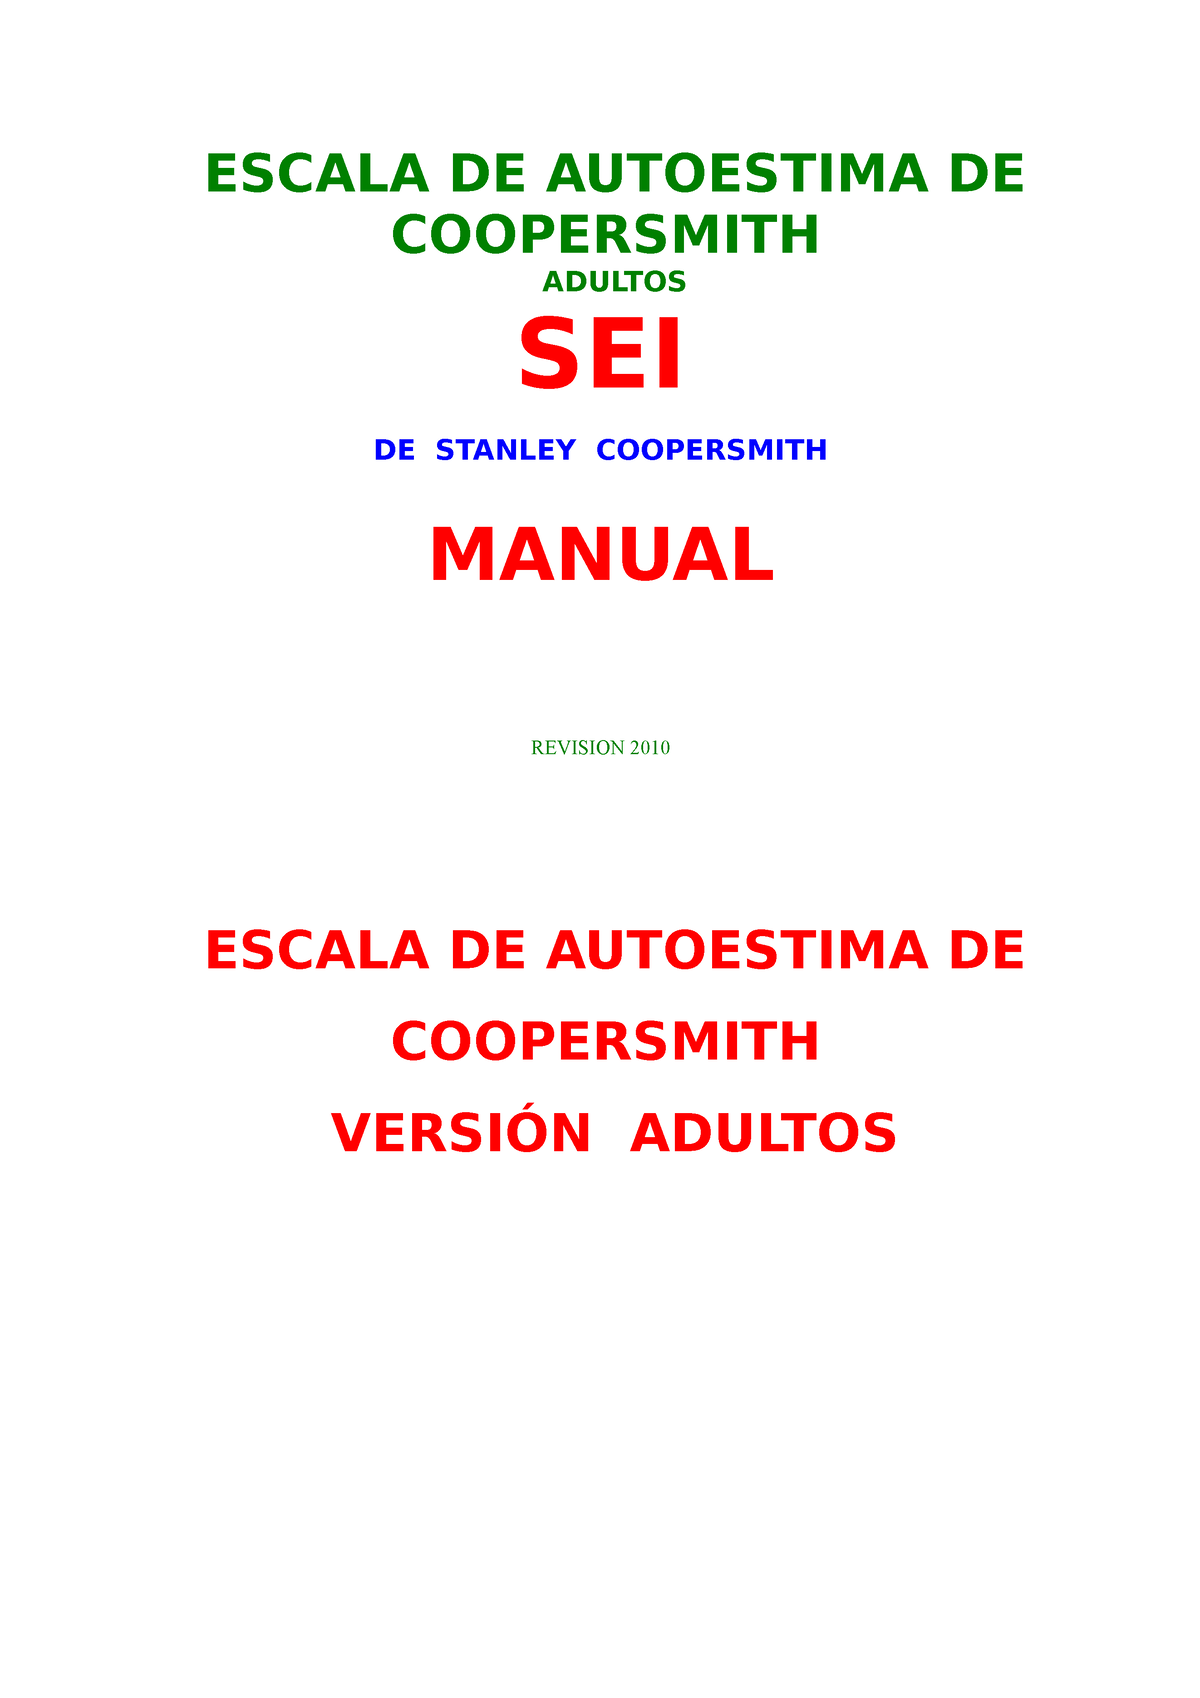 Manual Materiales Psicología Sexto Semestre Escala De Autoestima De Coopersmith Adultos Sei 7298